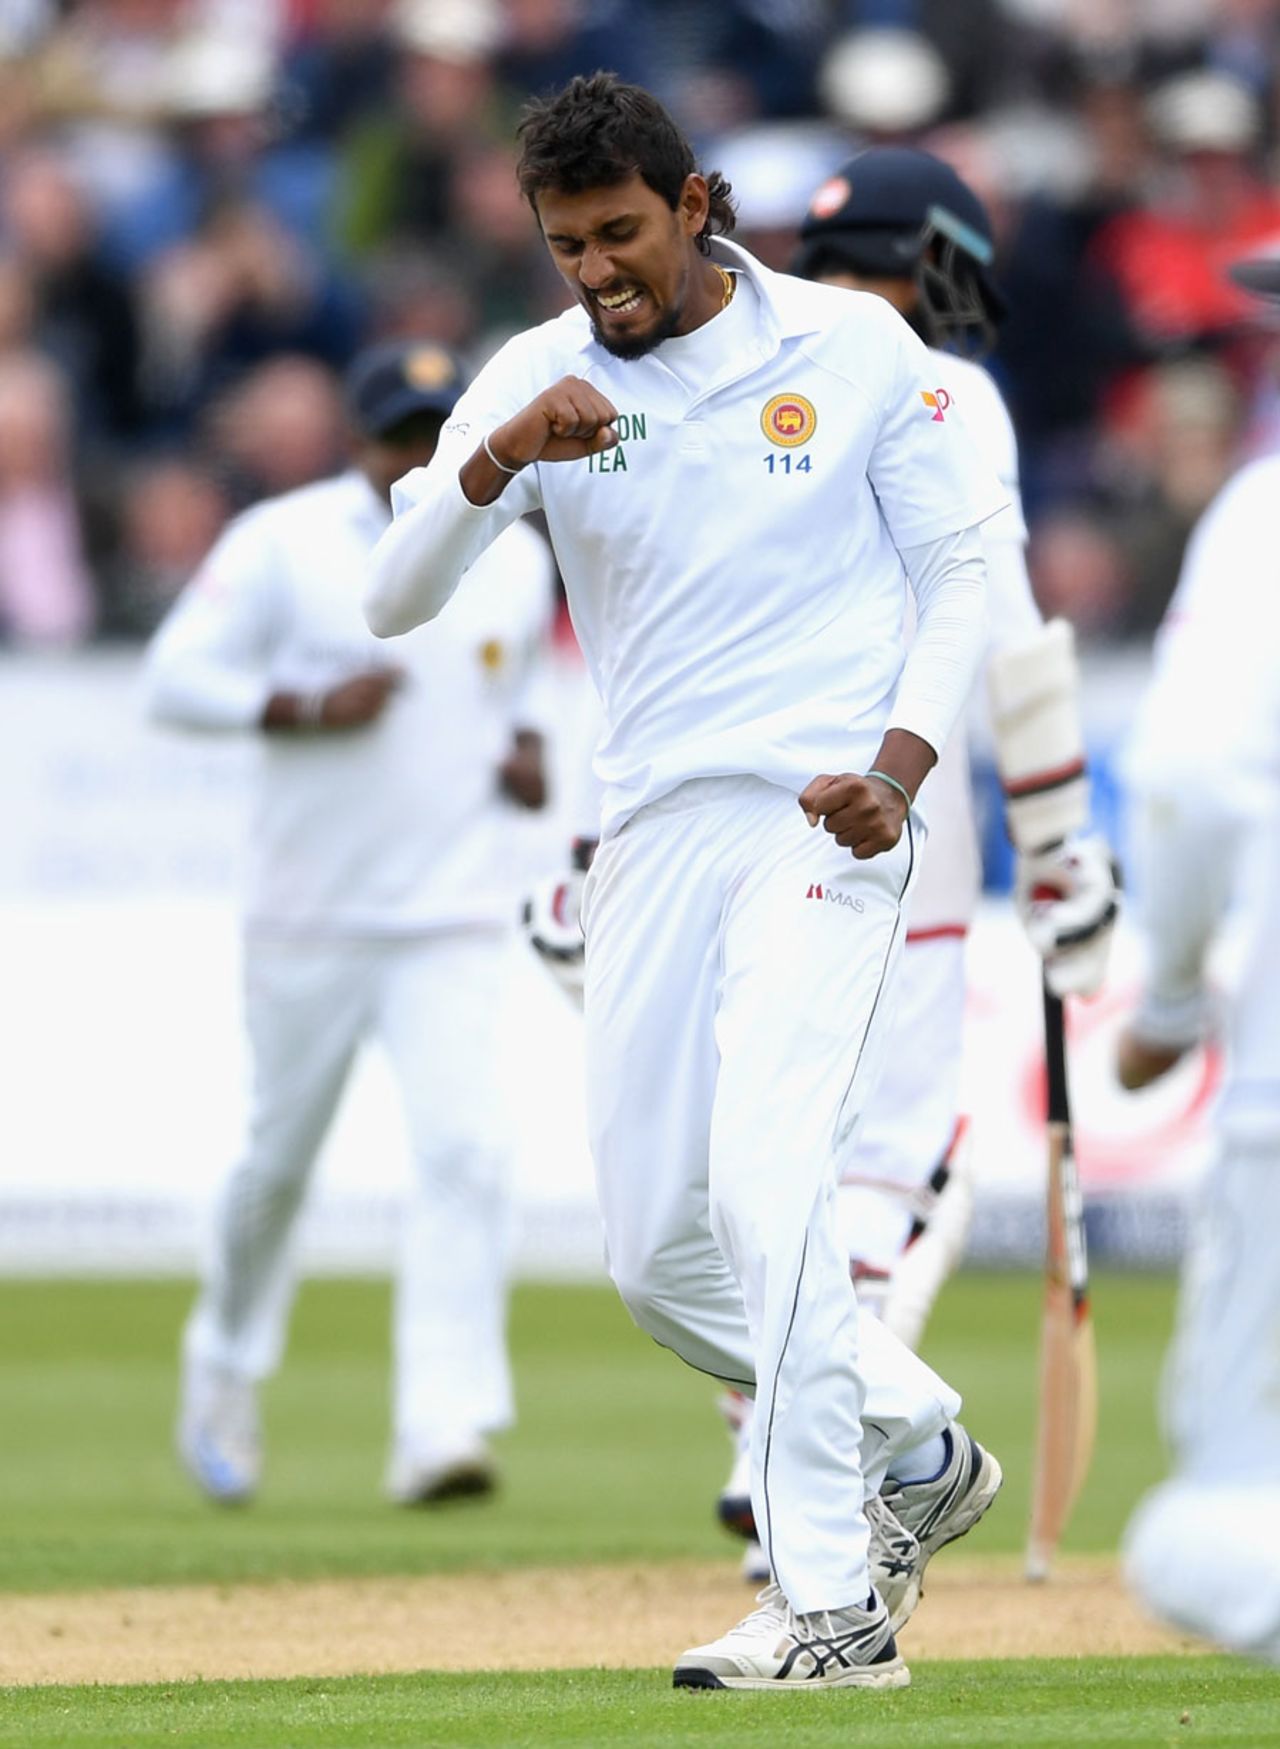 Suranga Lakmal celebrates the dismissal of Chris Woakes, England v Sri Lanka, 2nd Test, Chester-le-Street, 2nd day, May 28, 2016